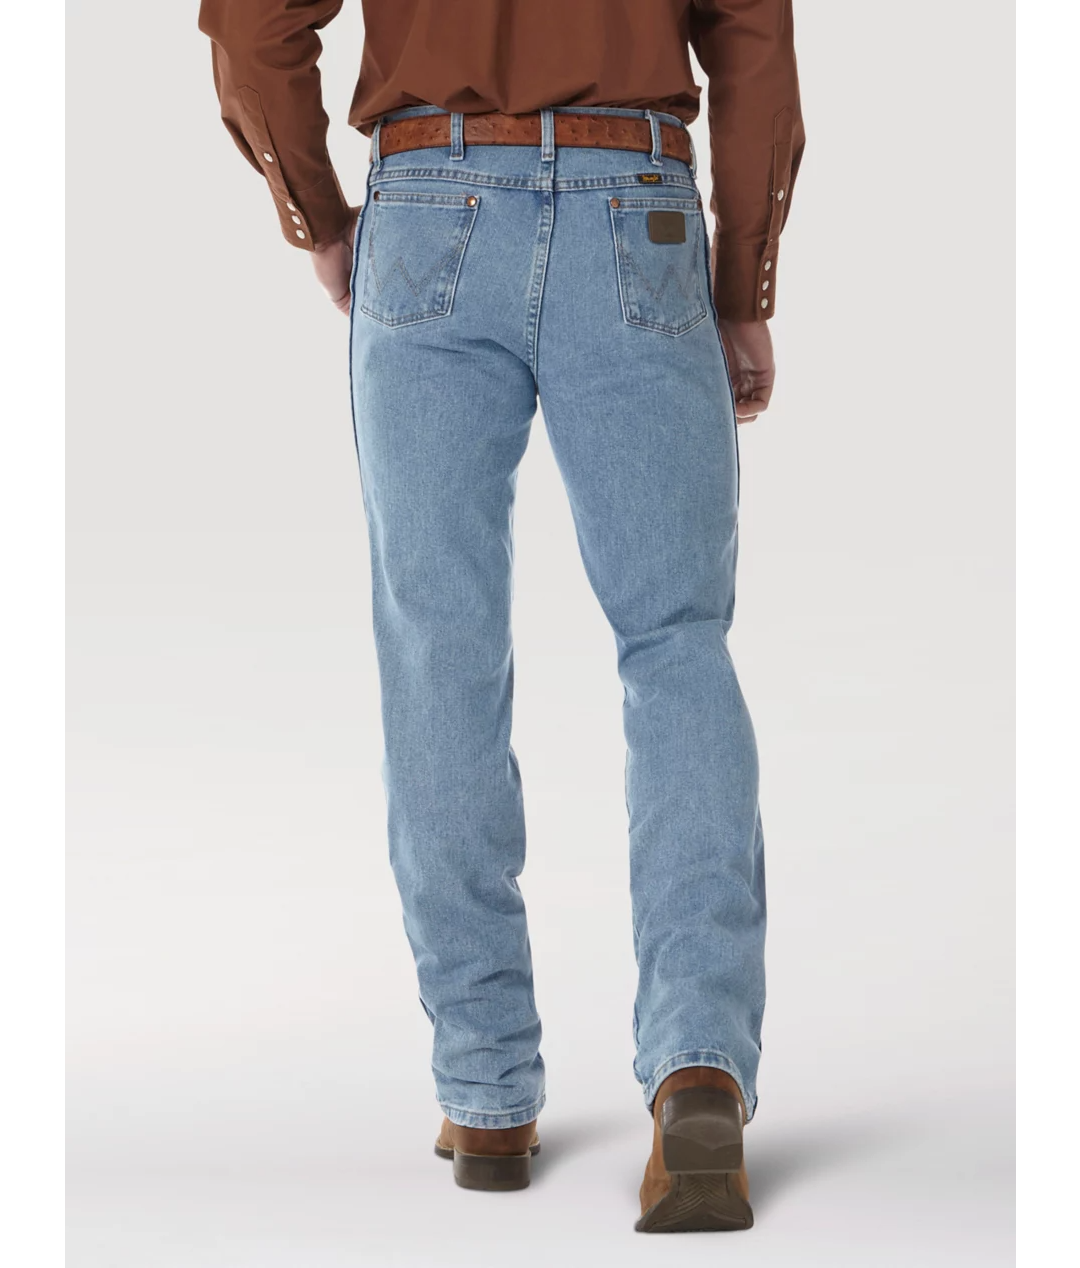 Wrangler Men's Cowboy Cut Slim Fit Jeans - Prewashed Indigo